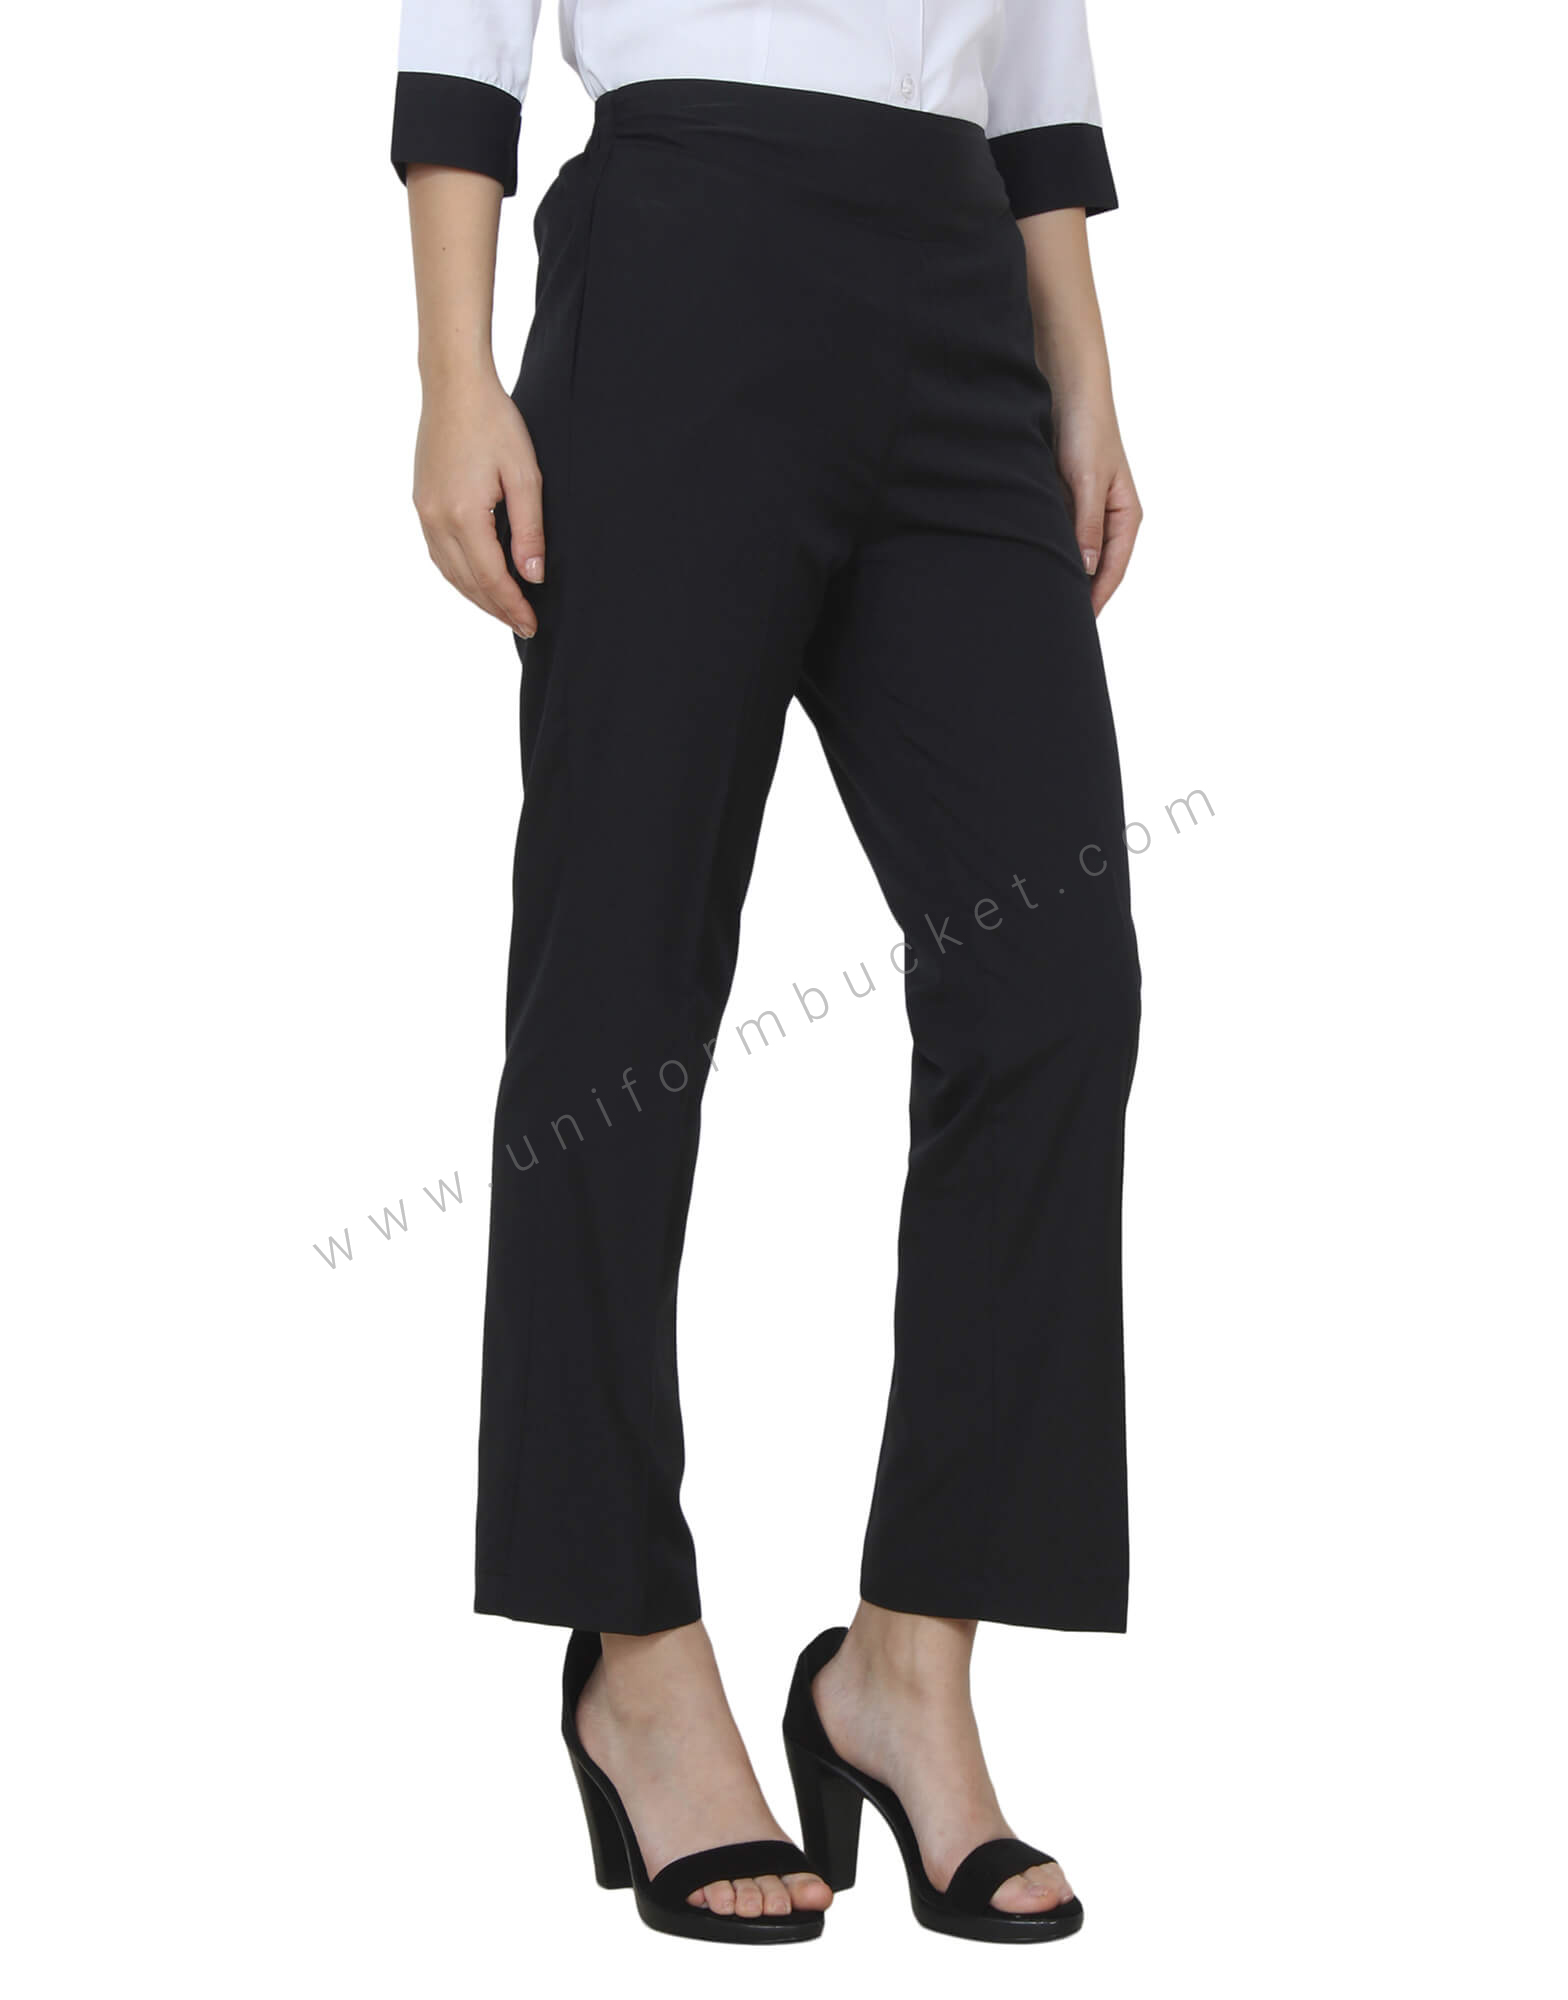 Buy Black Trousers Online in India at Best Price  Westside